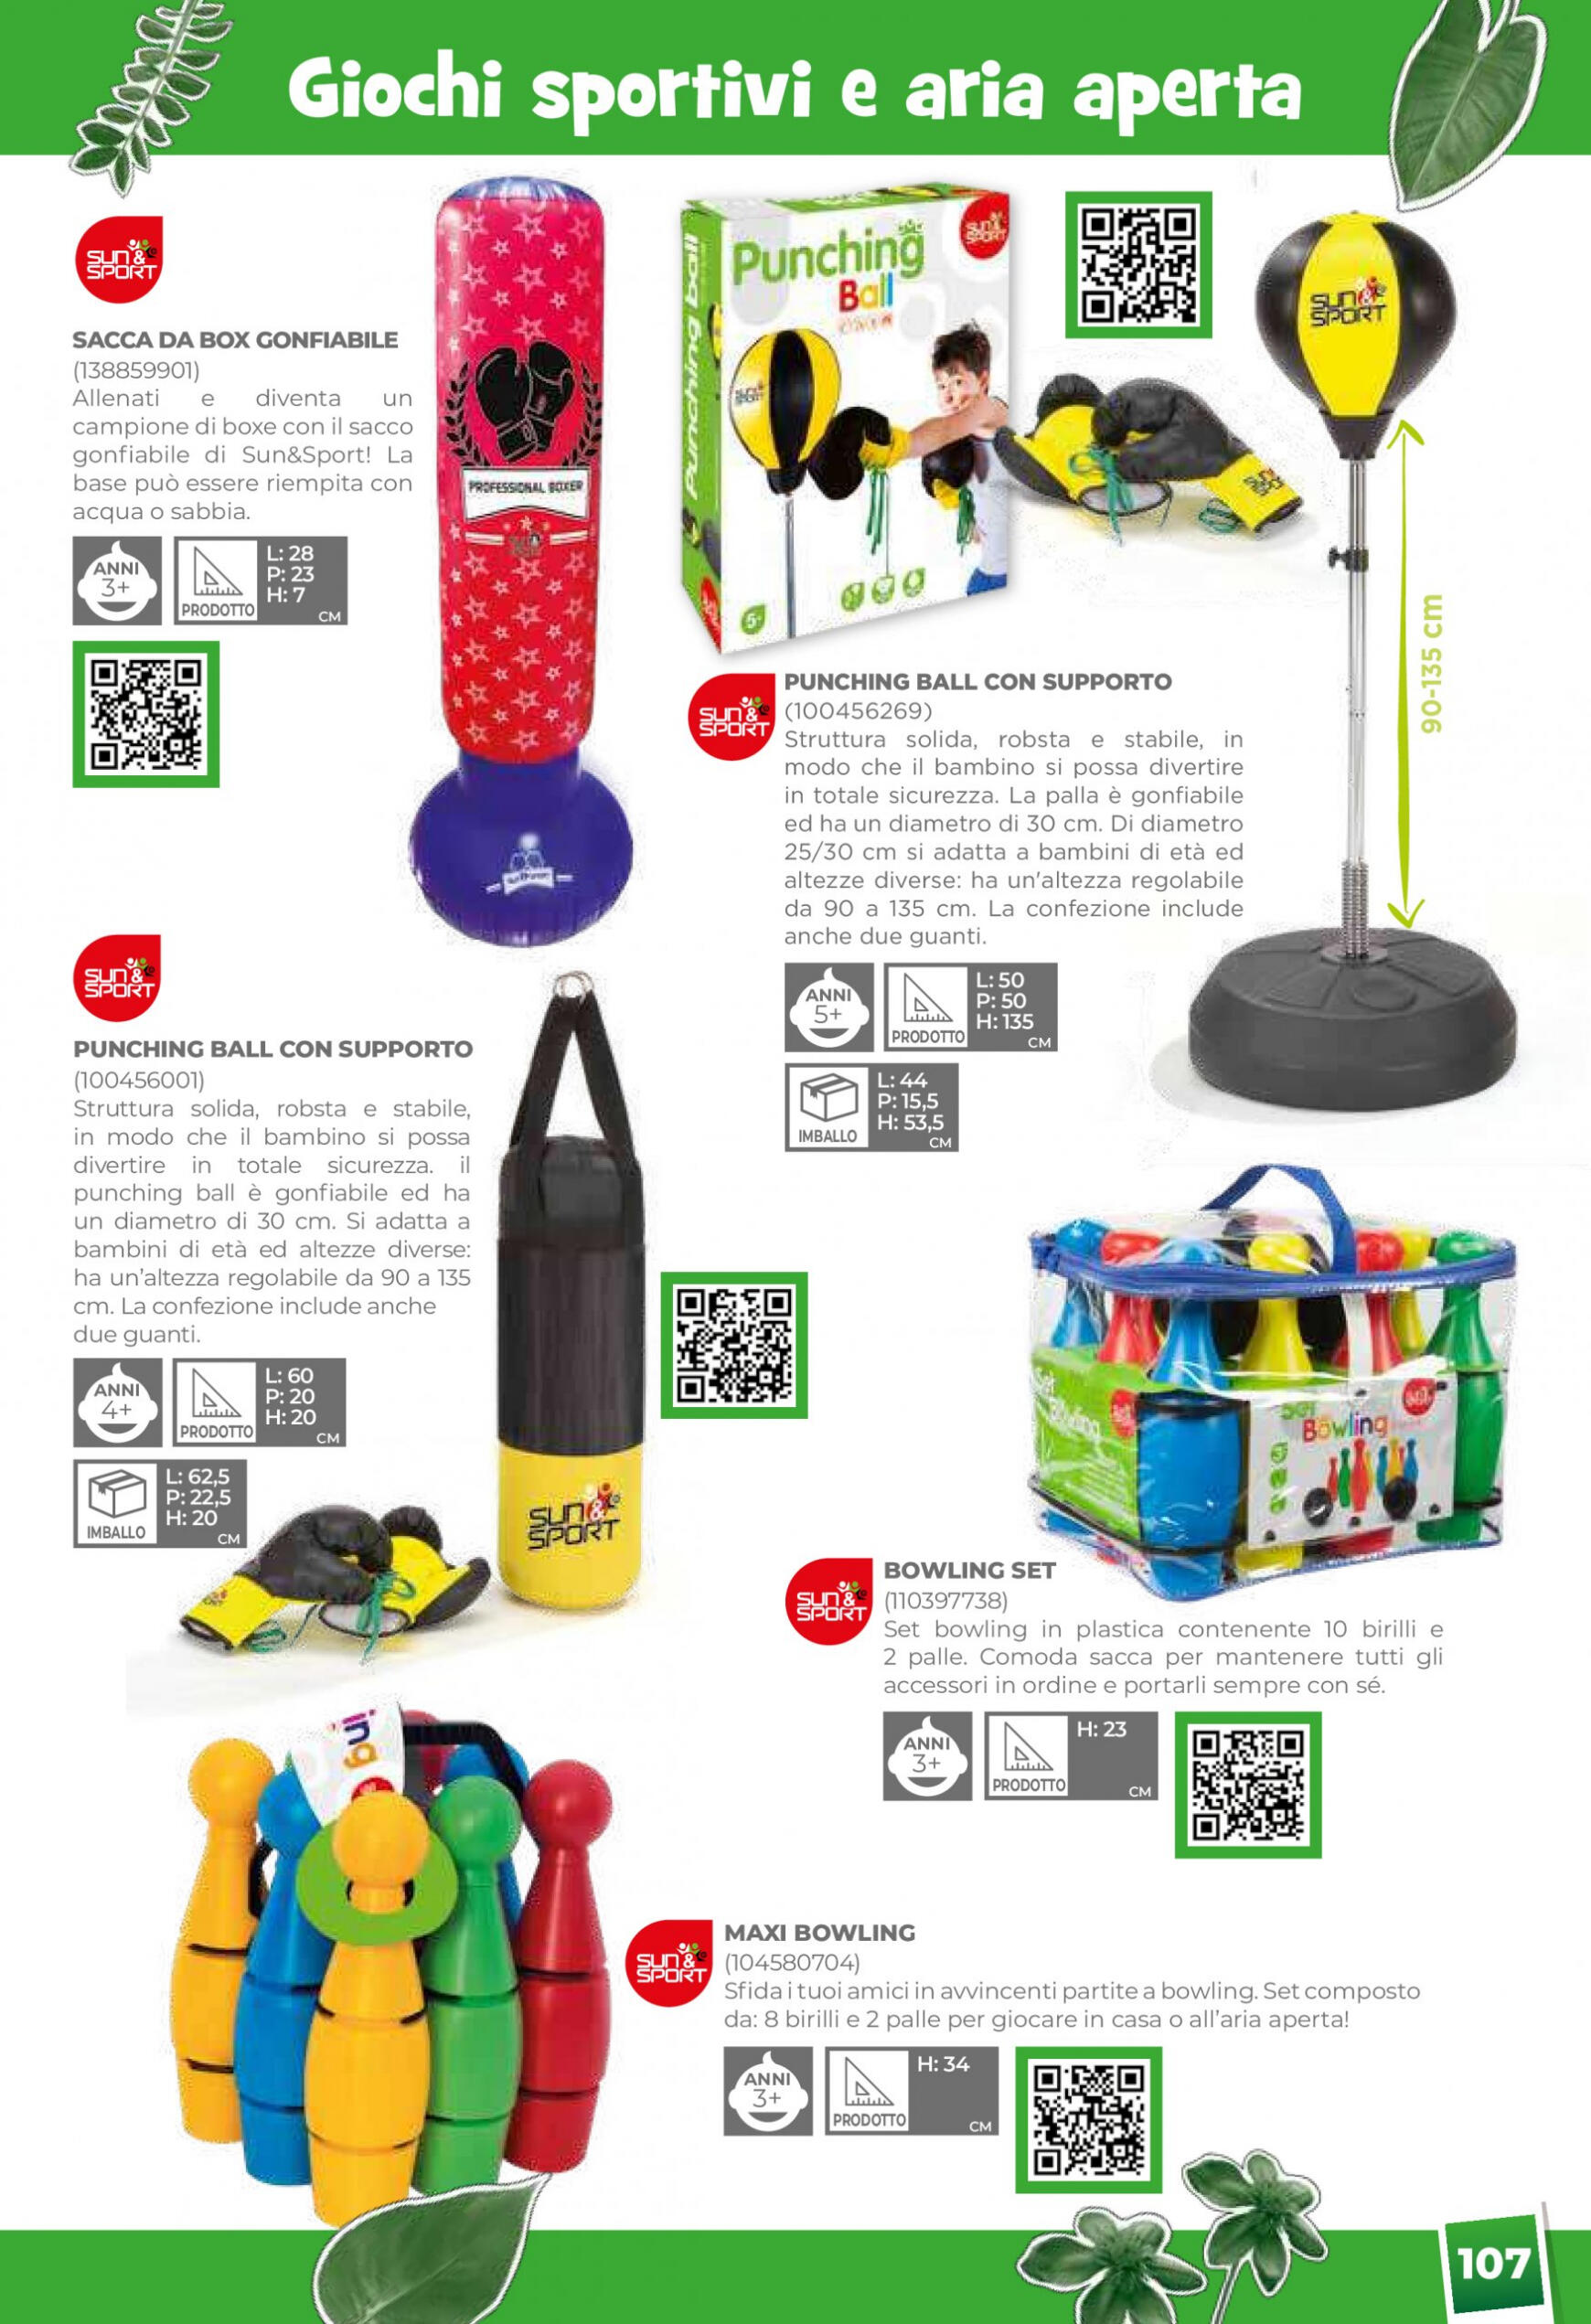 toys-center - Nuovo volantino Toys Center 01.05. - 31.12. - page: 109